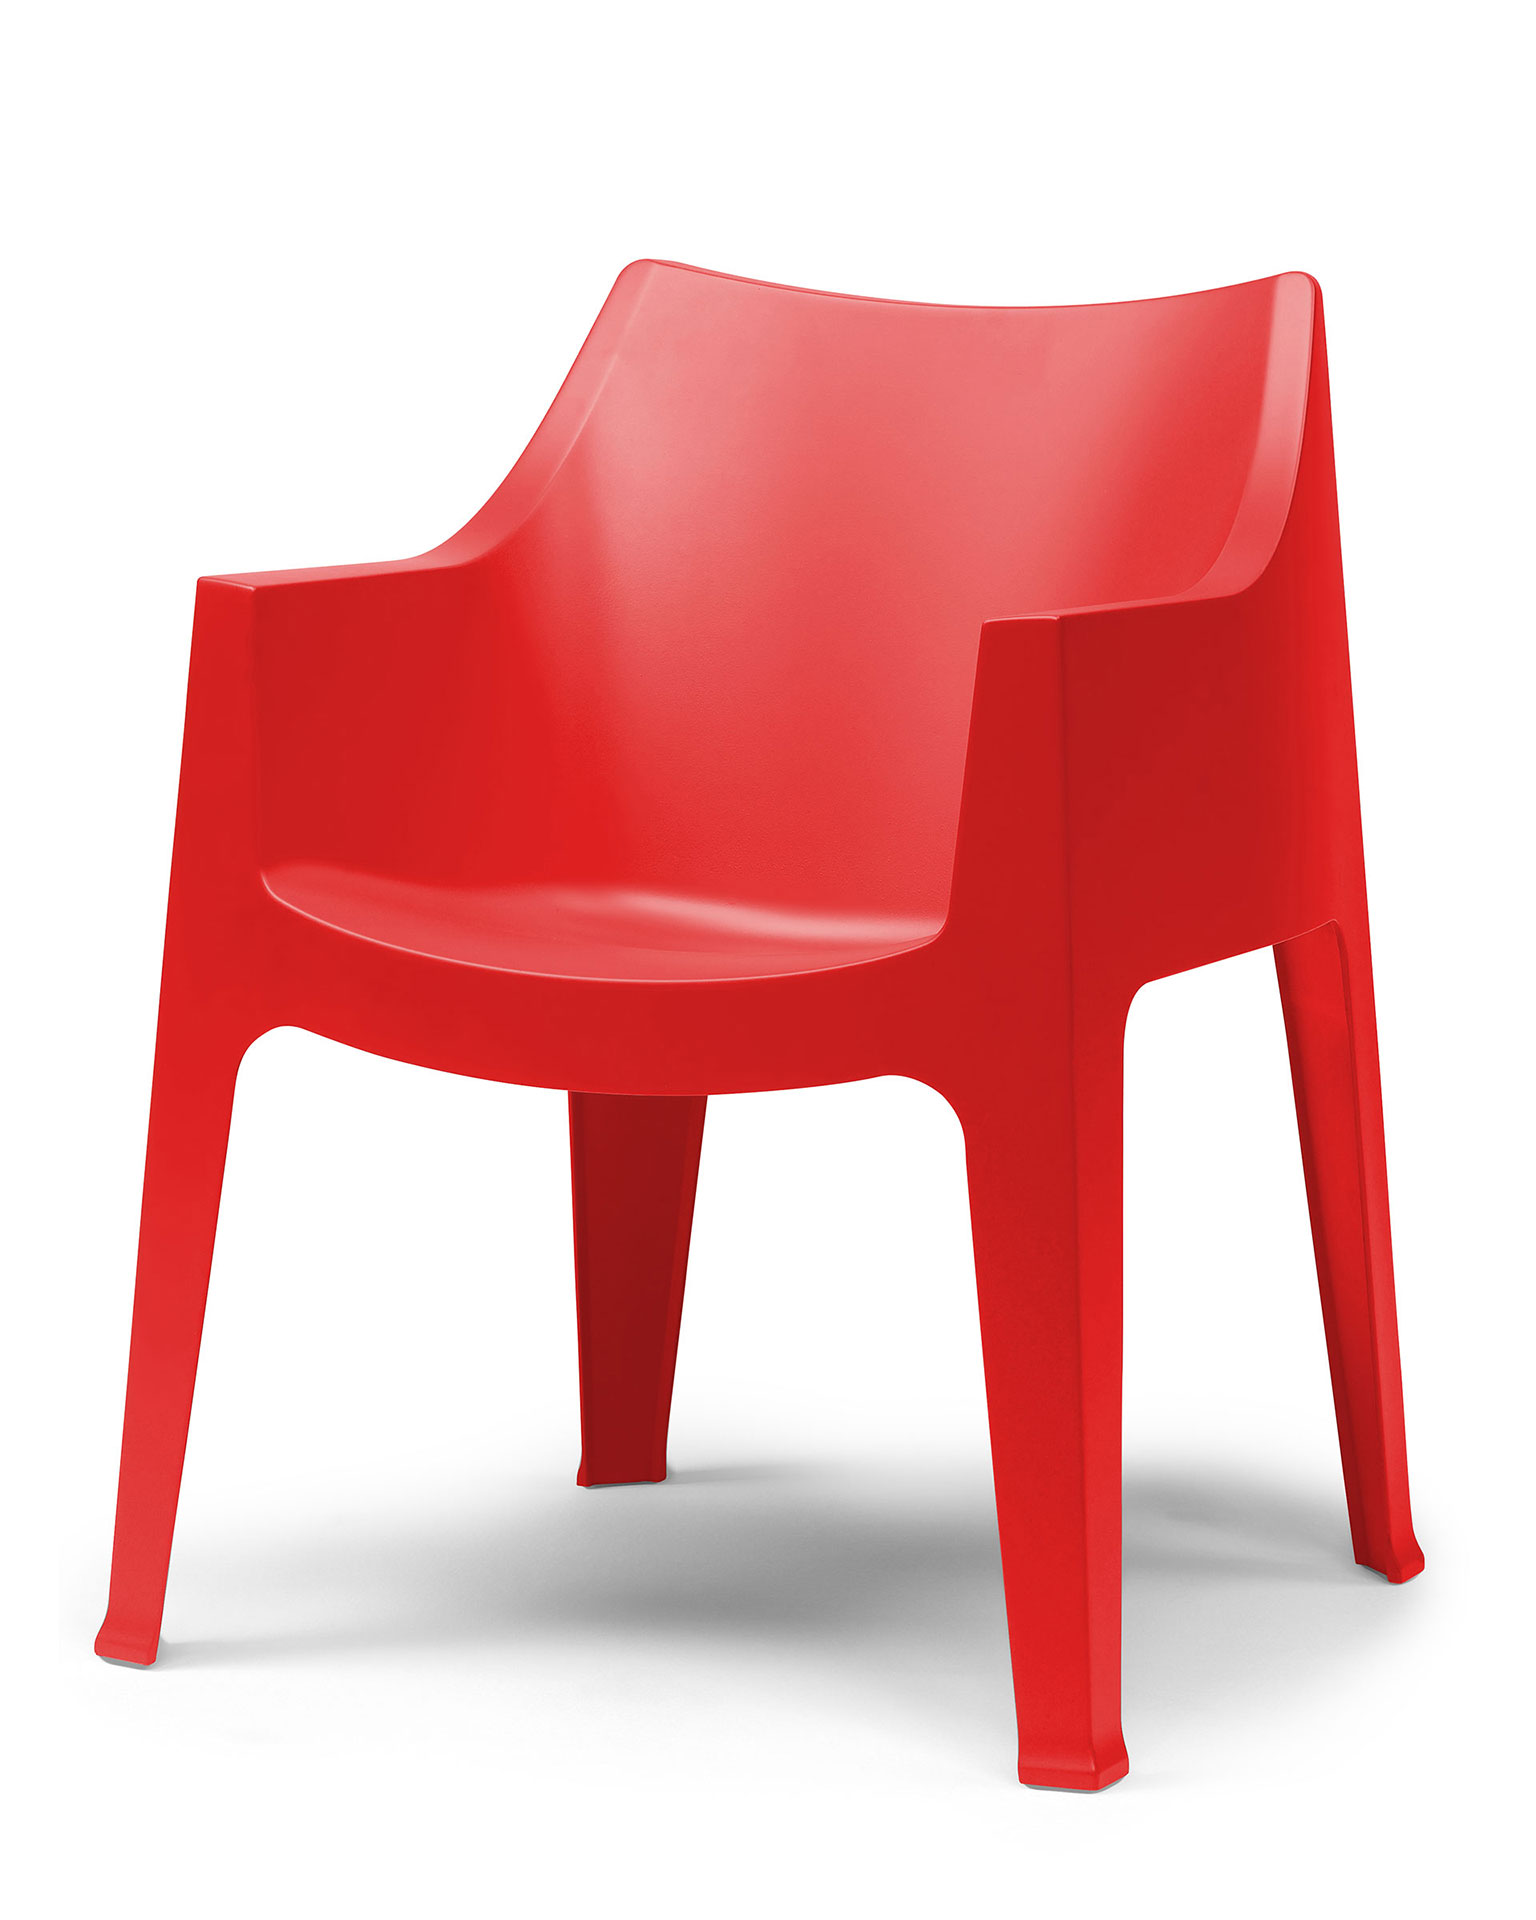 COCCOLONA Chair